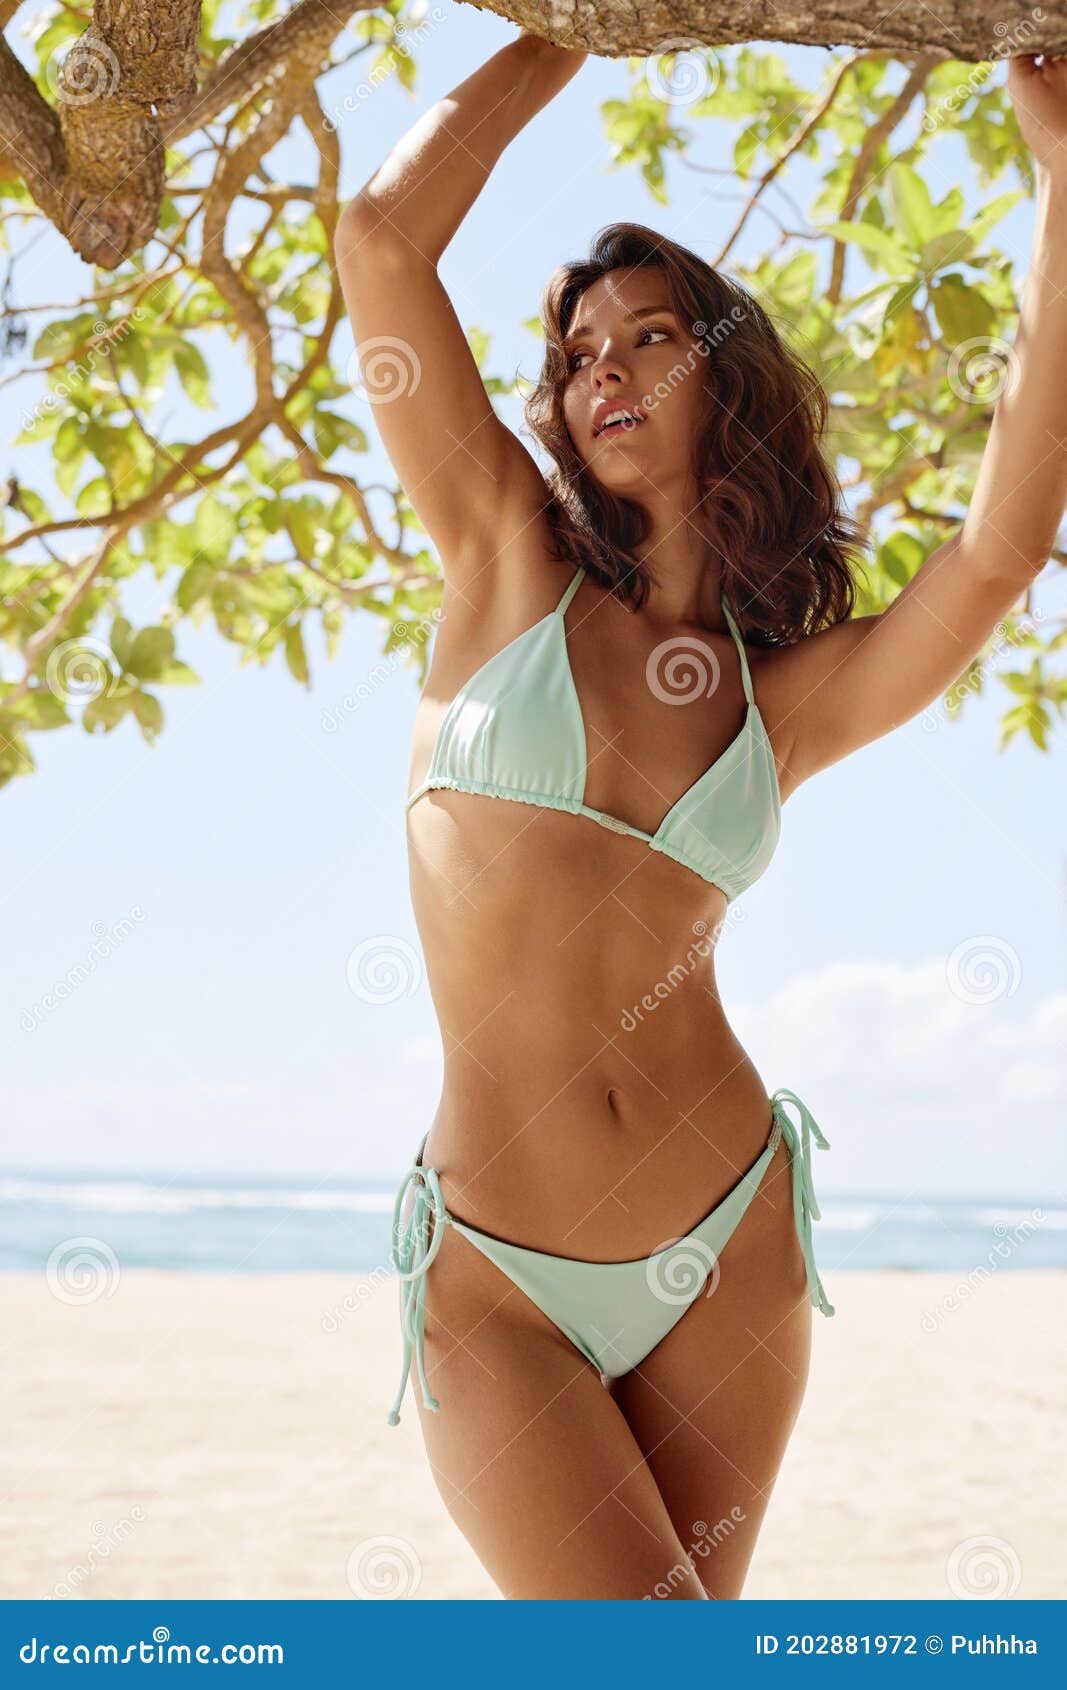 Beautiful Girlâ€™s In Stylish Bikini Portrait Posing On Sandy Beach In